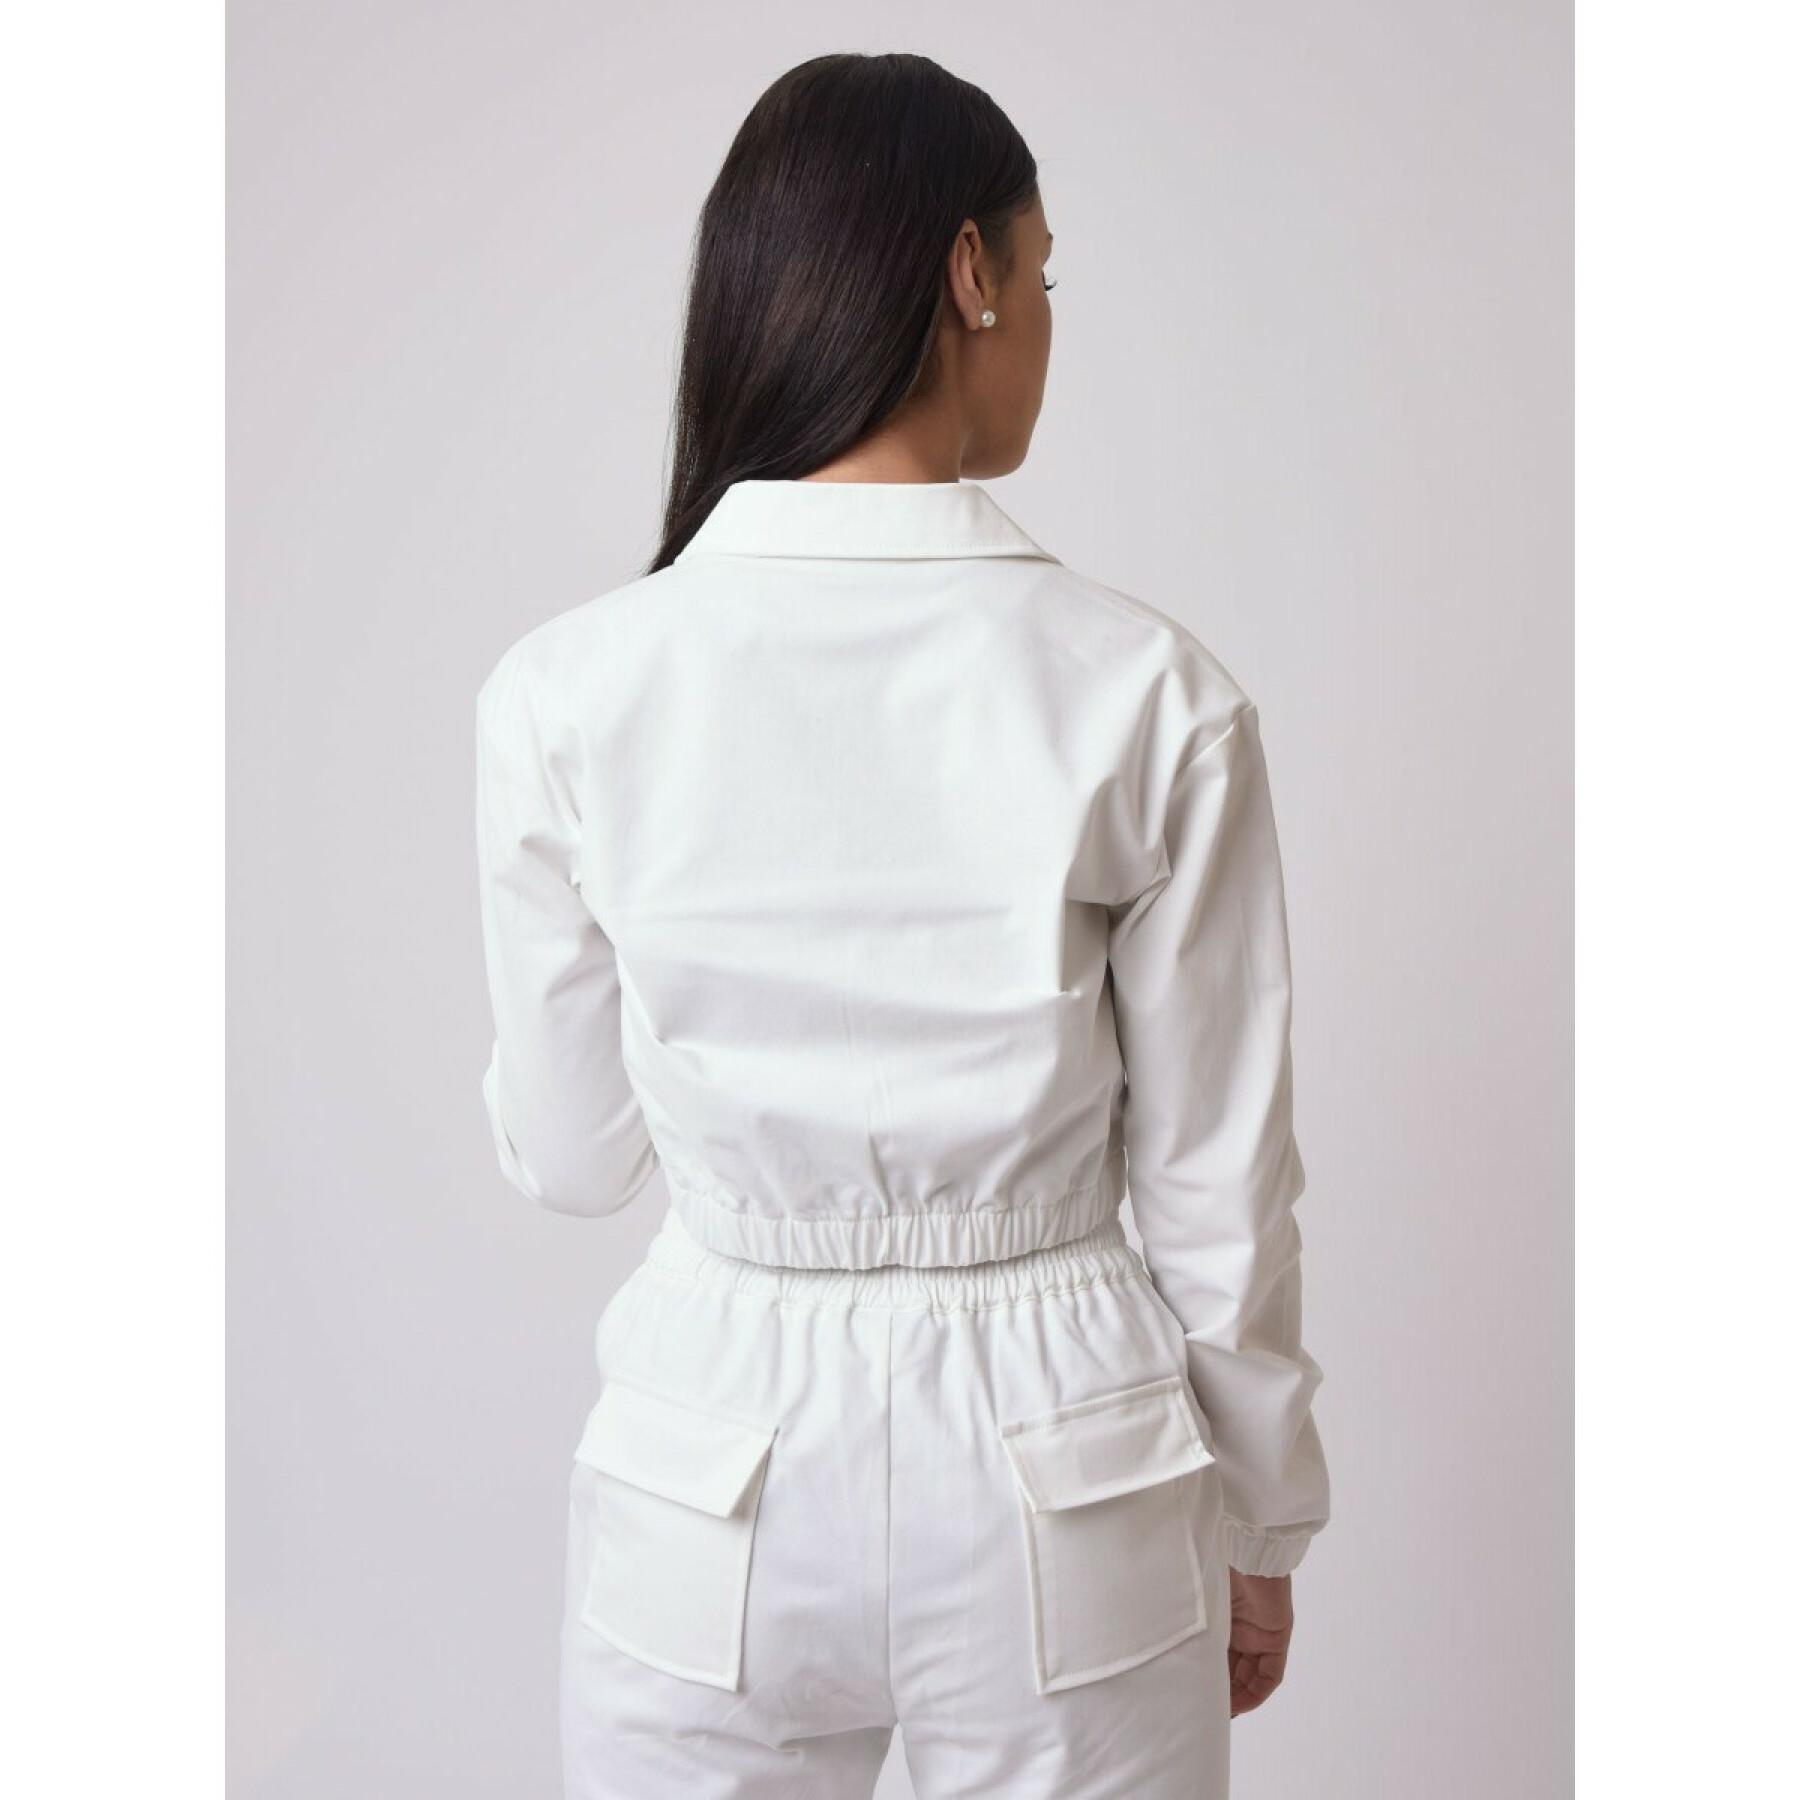 Women's shirt collar pocket jacket Project X Paris